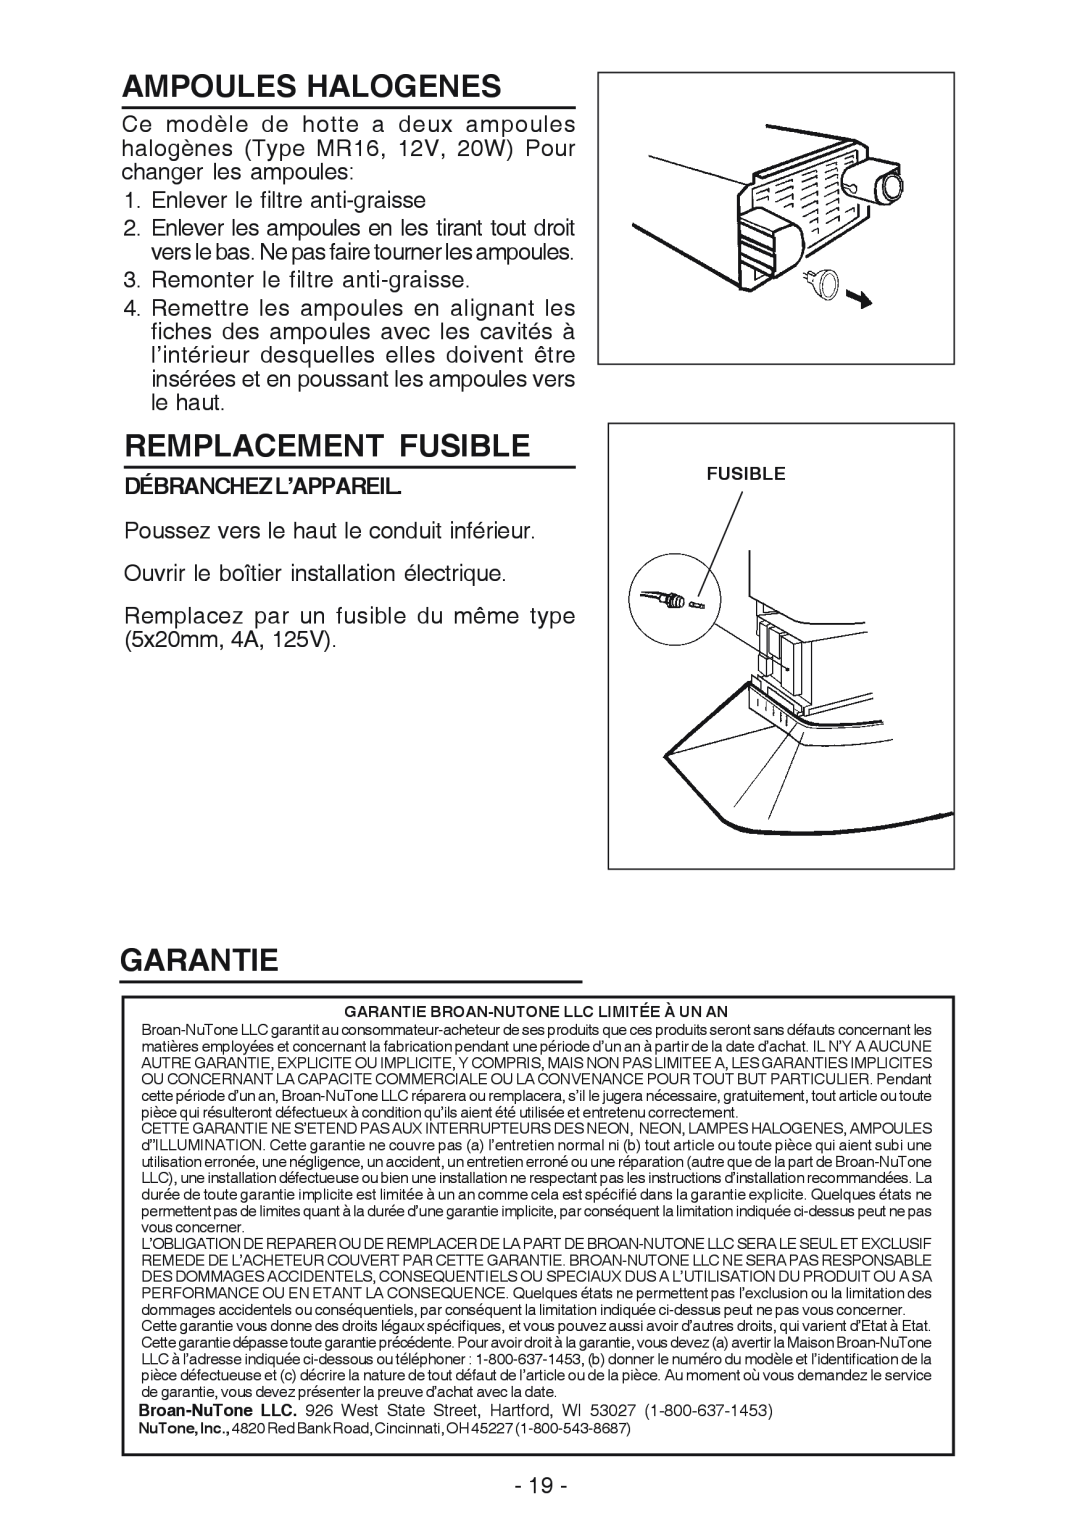 NuTone NP629004 manual Ampoules Halogenes, Remplacement Fusible, Garantie 